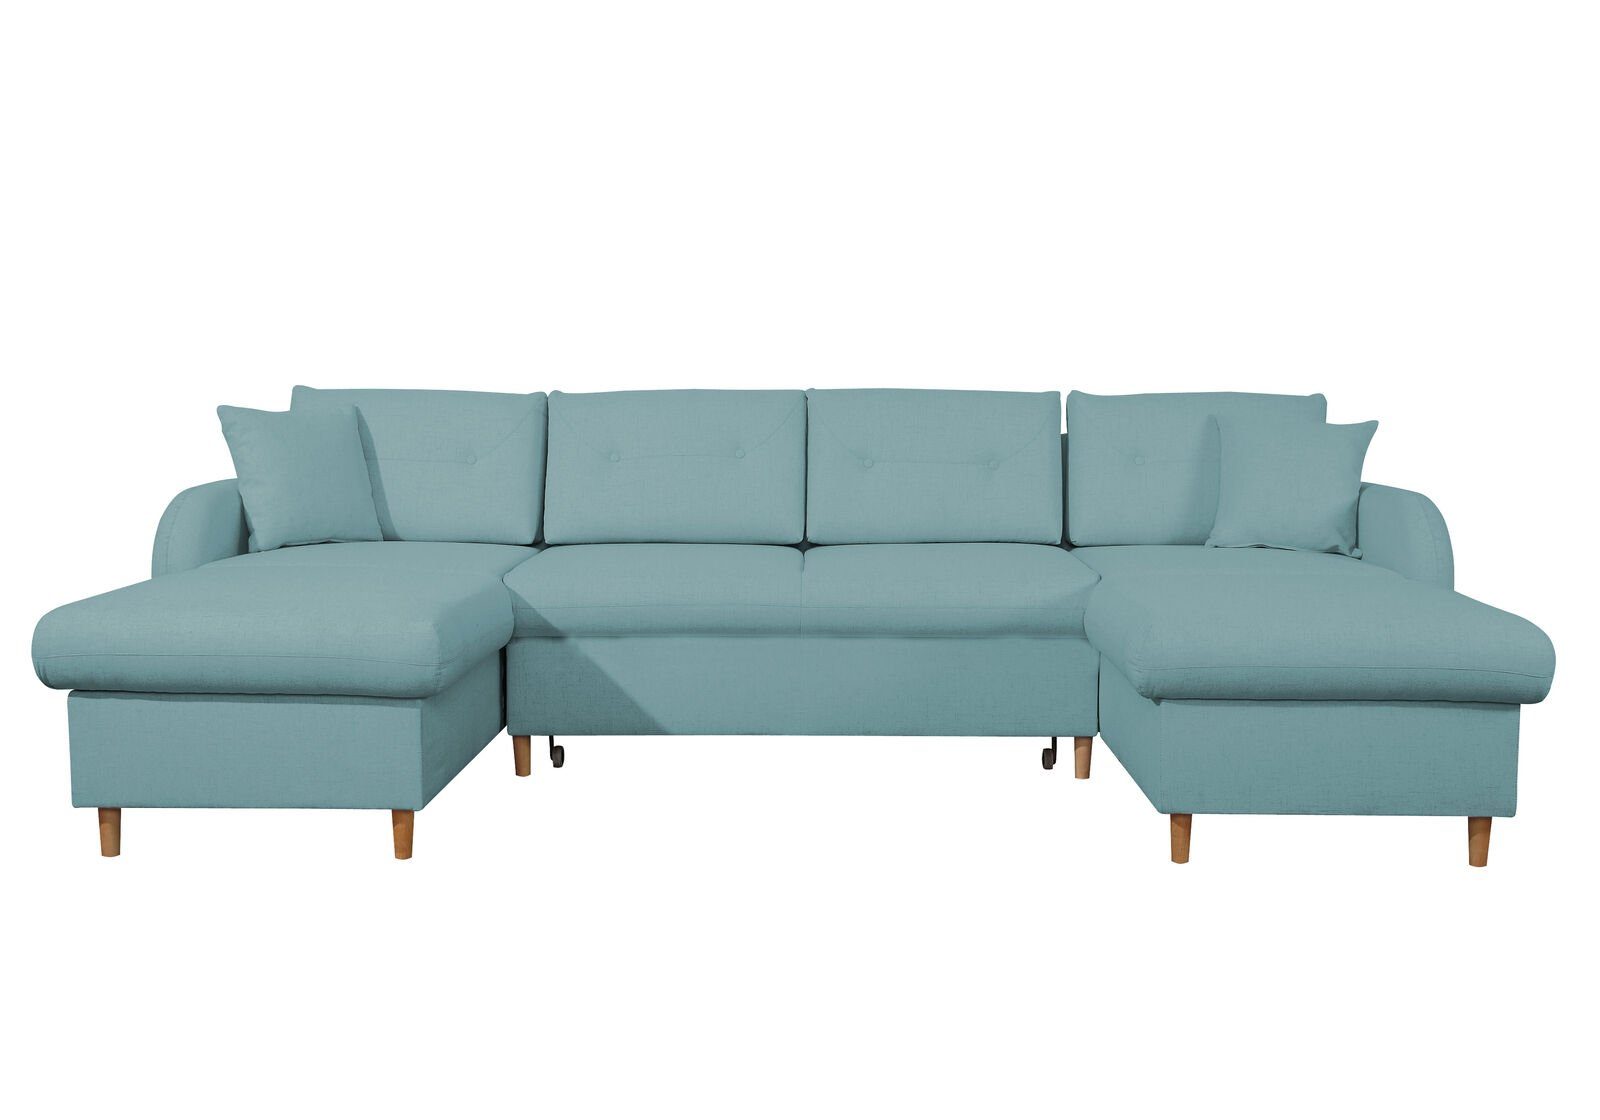 JVmoebel Ecksofa Wohnlandschaft Ecksofa Stoff U-Form Bettfunktion Couch Design, Made in Europe Blau